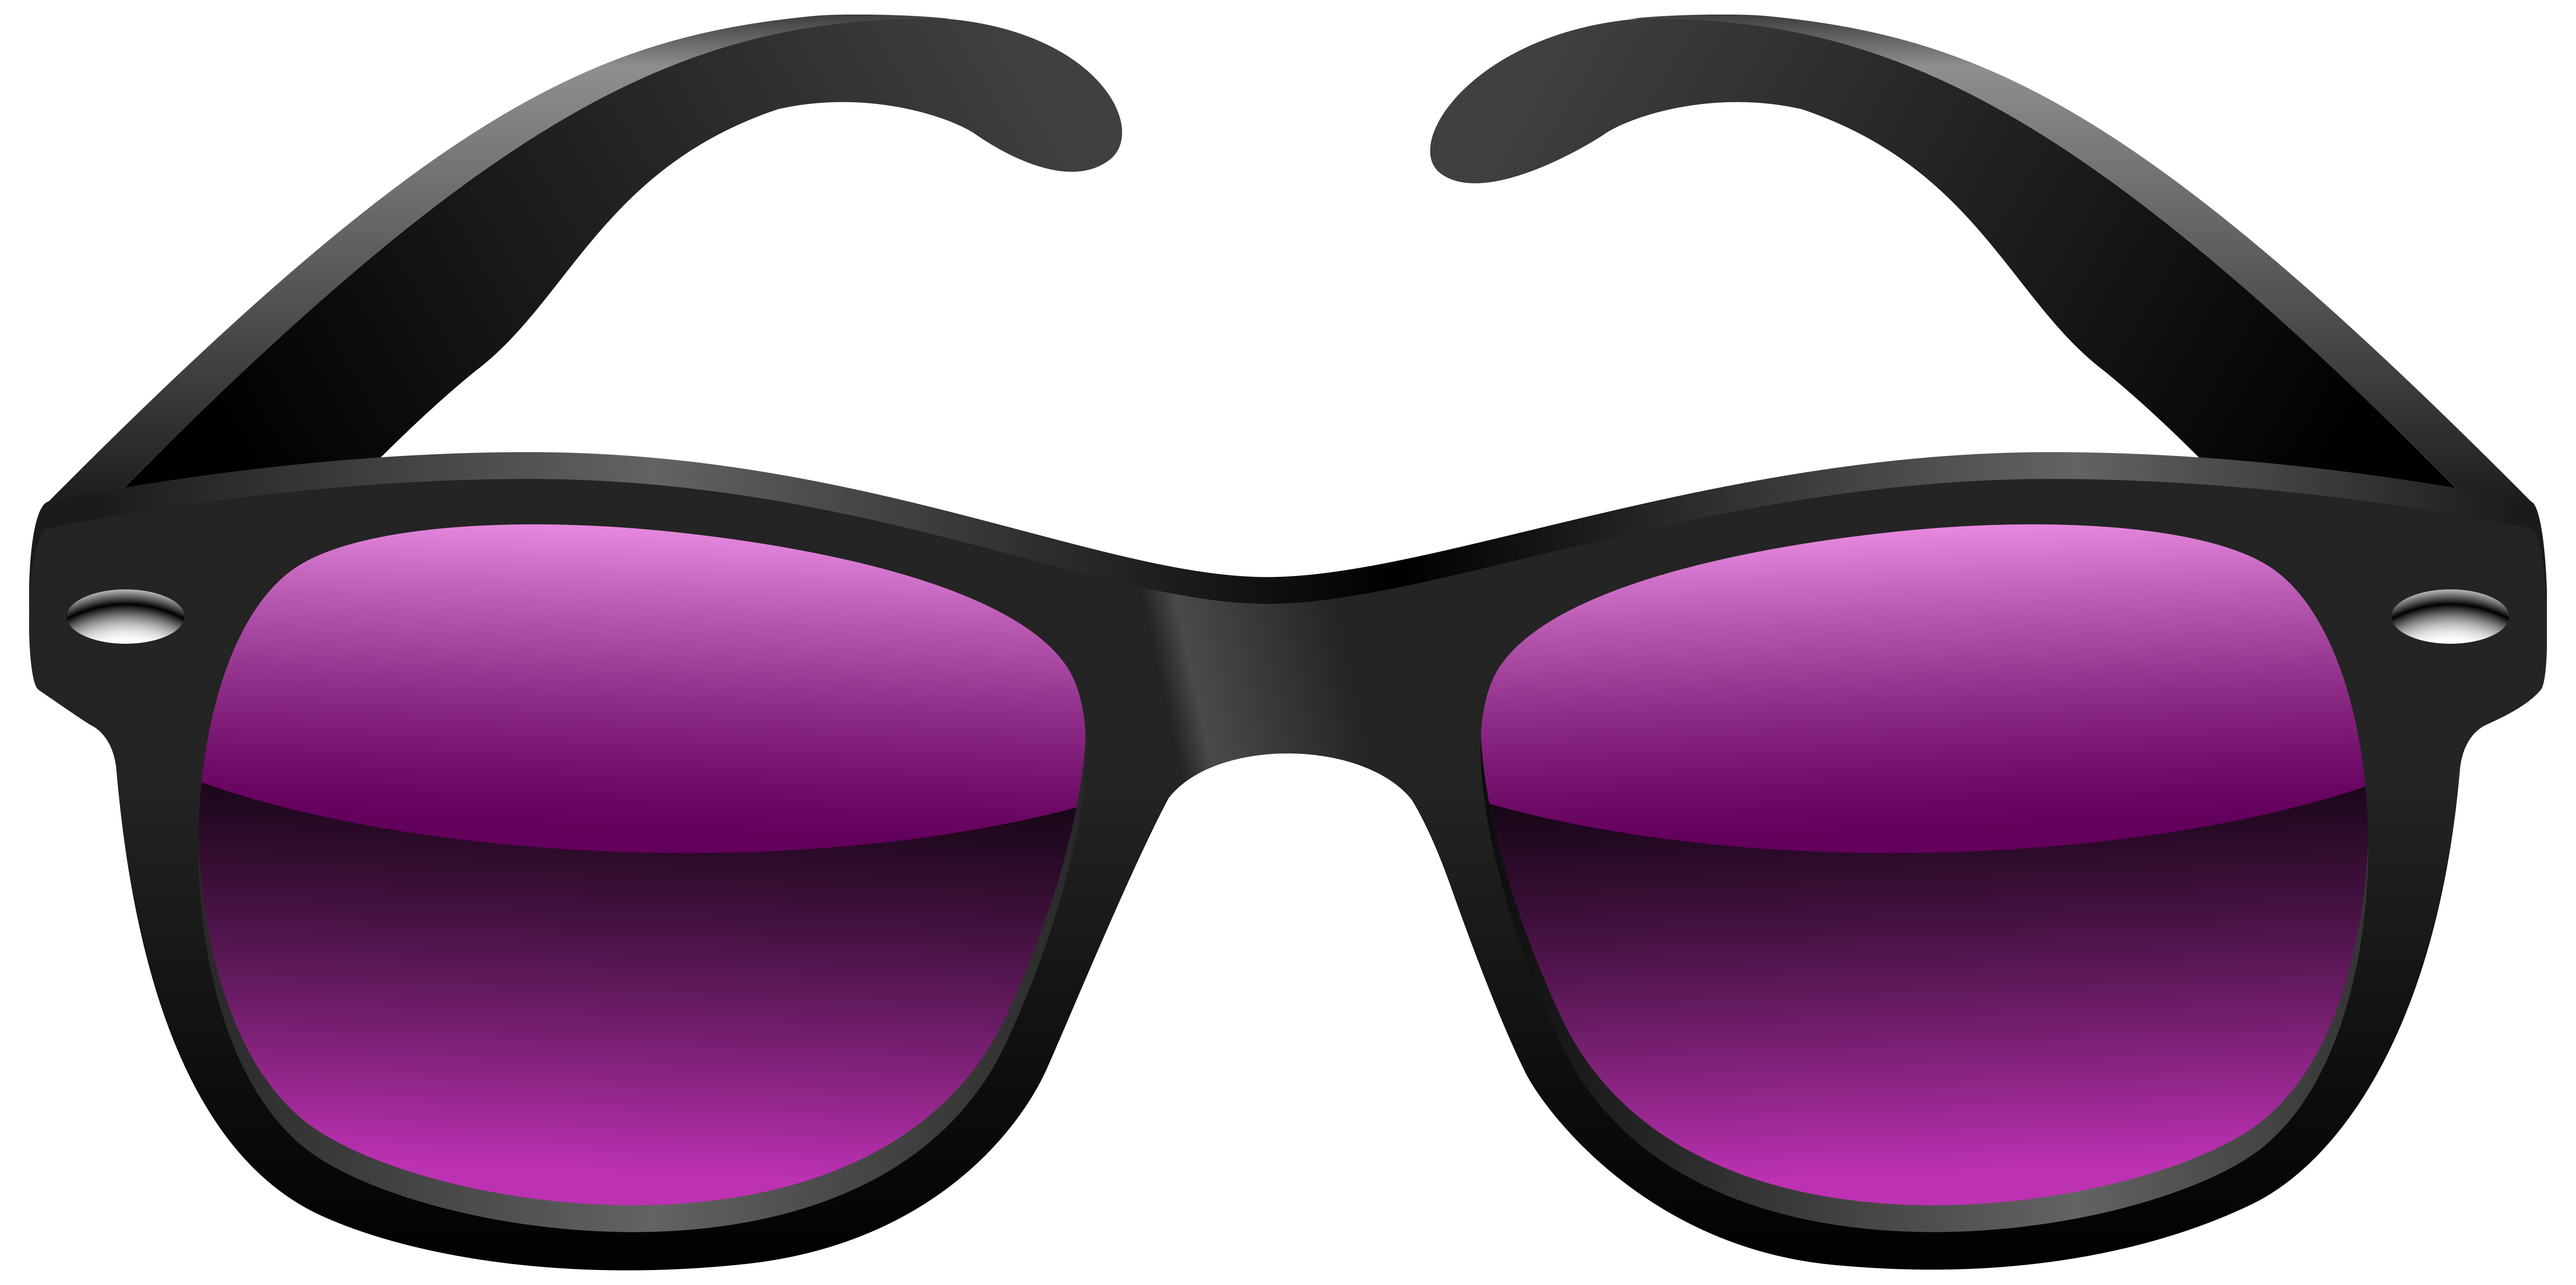 Sunglasses glasses clipart black and white free clipart image